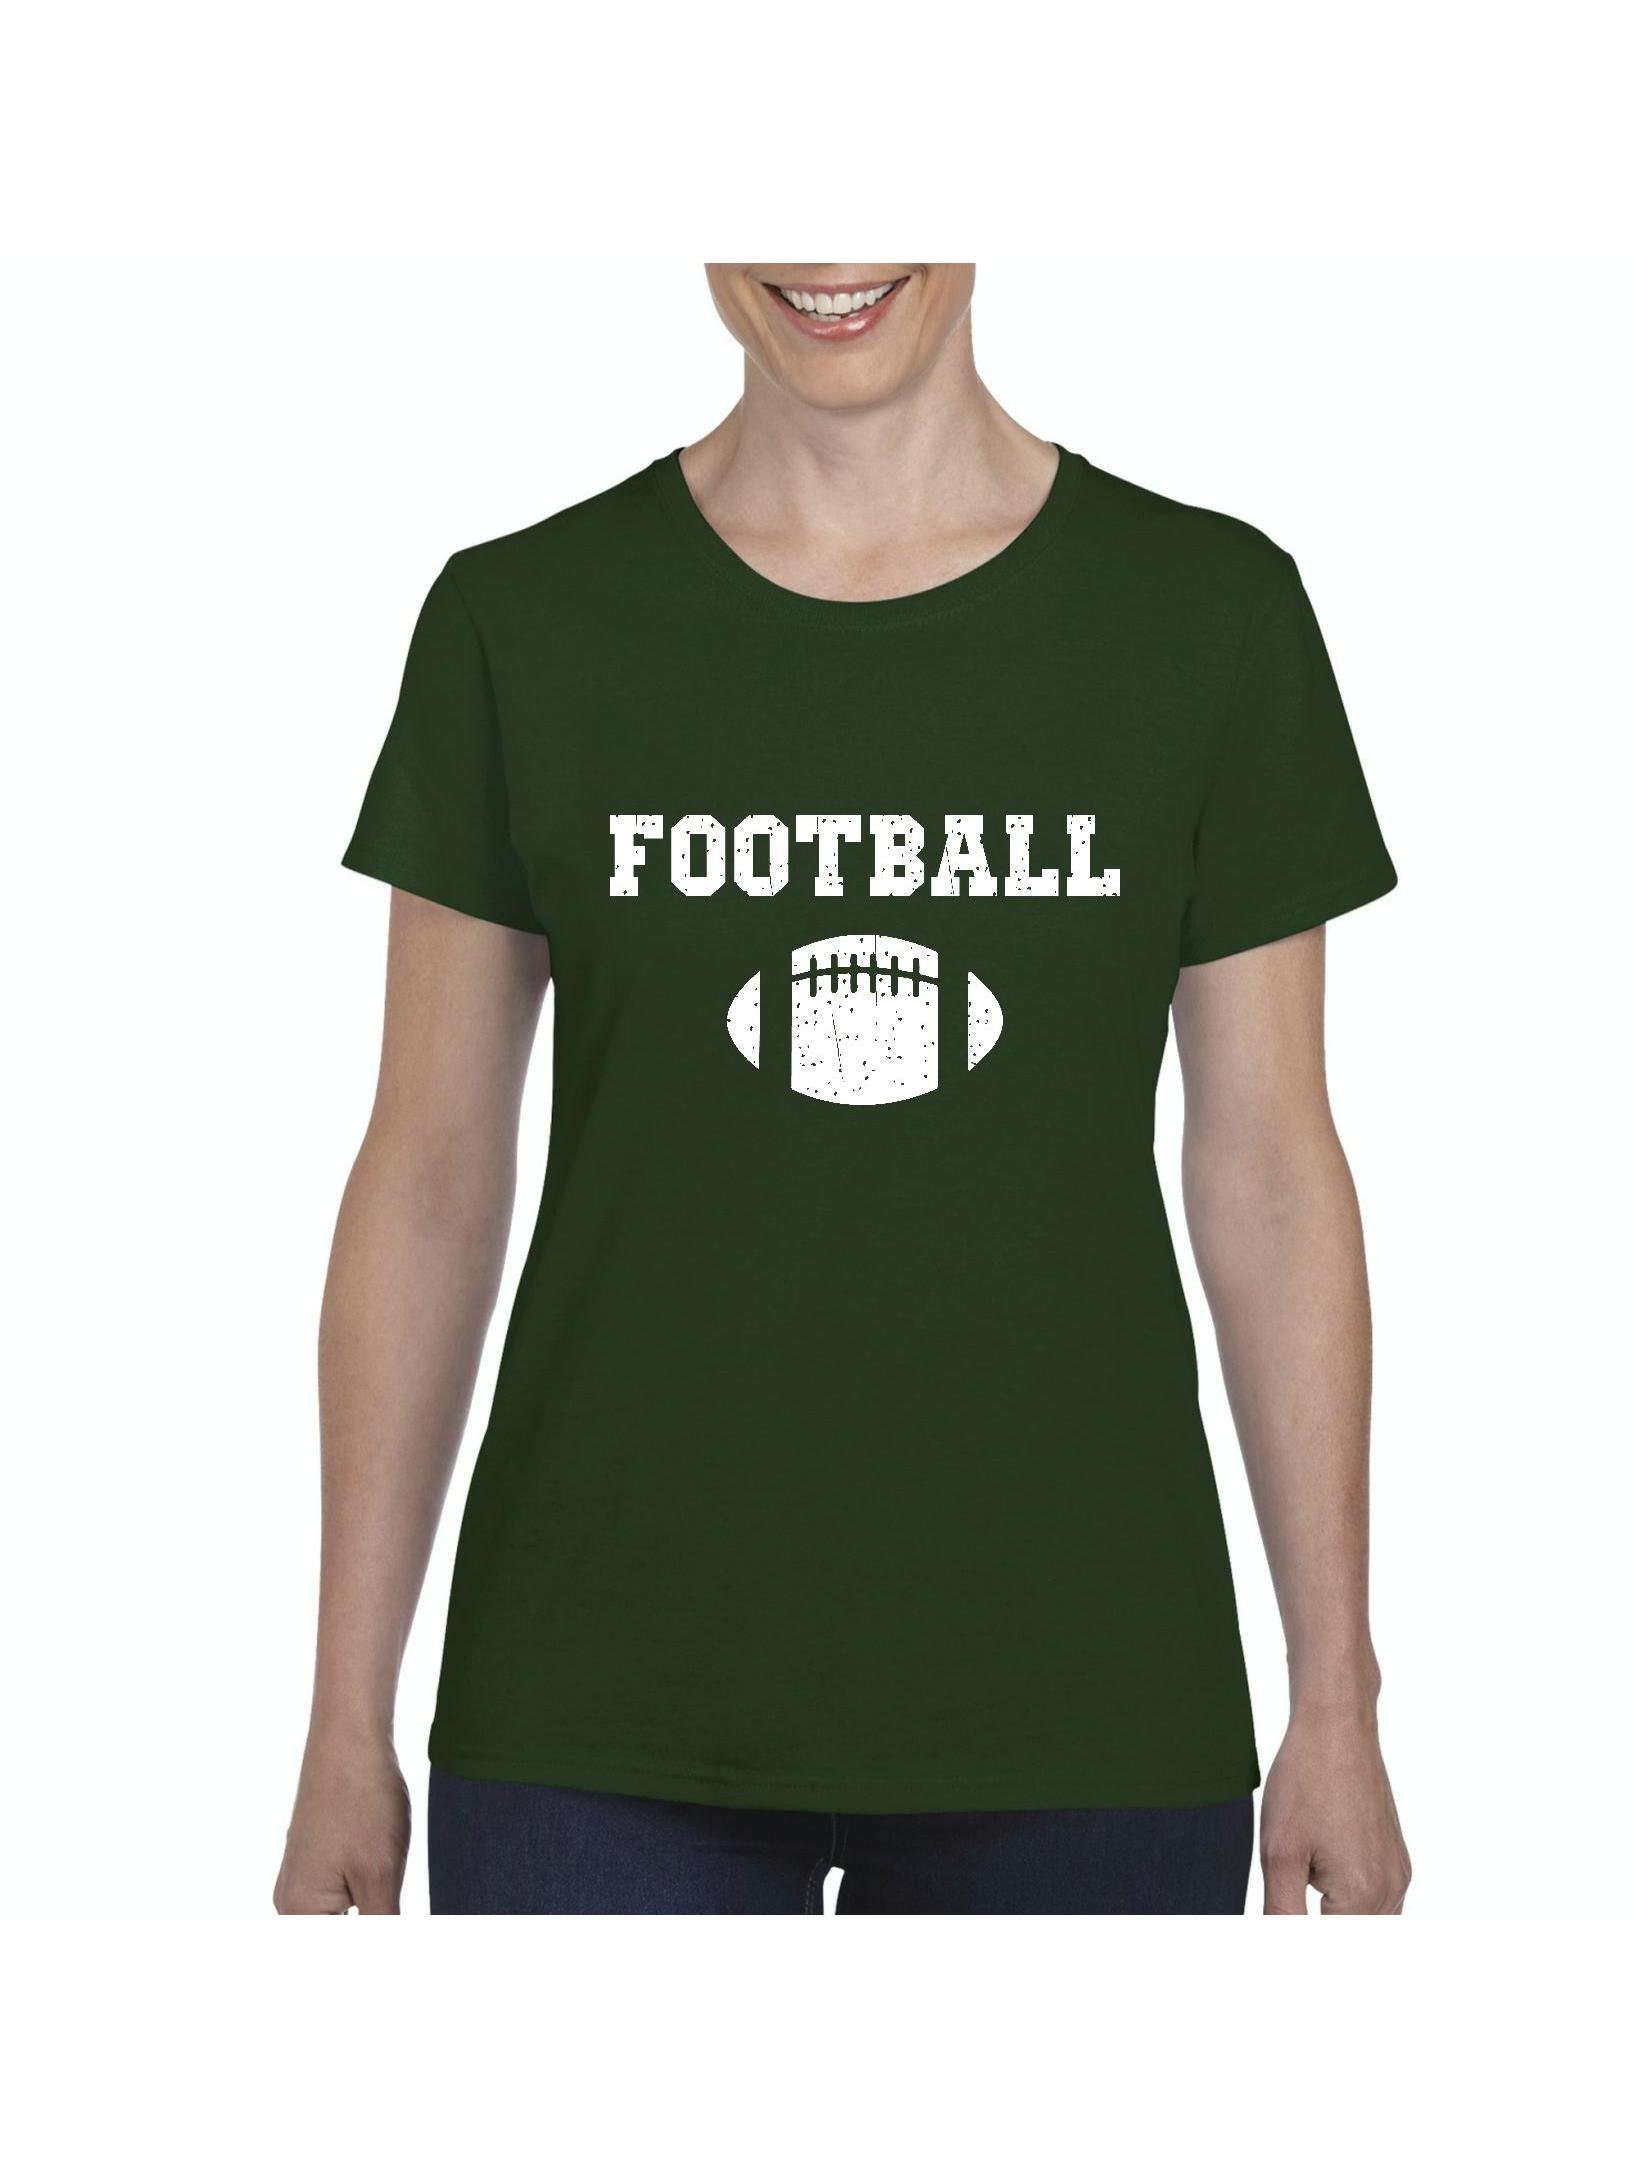 Football Fan Gift Football Women's Short Sleeve T-shirt - Etsy